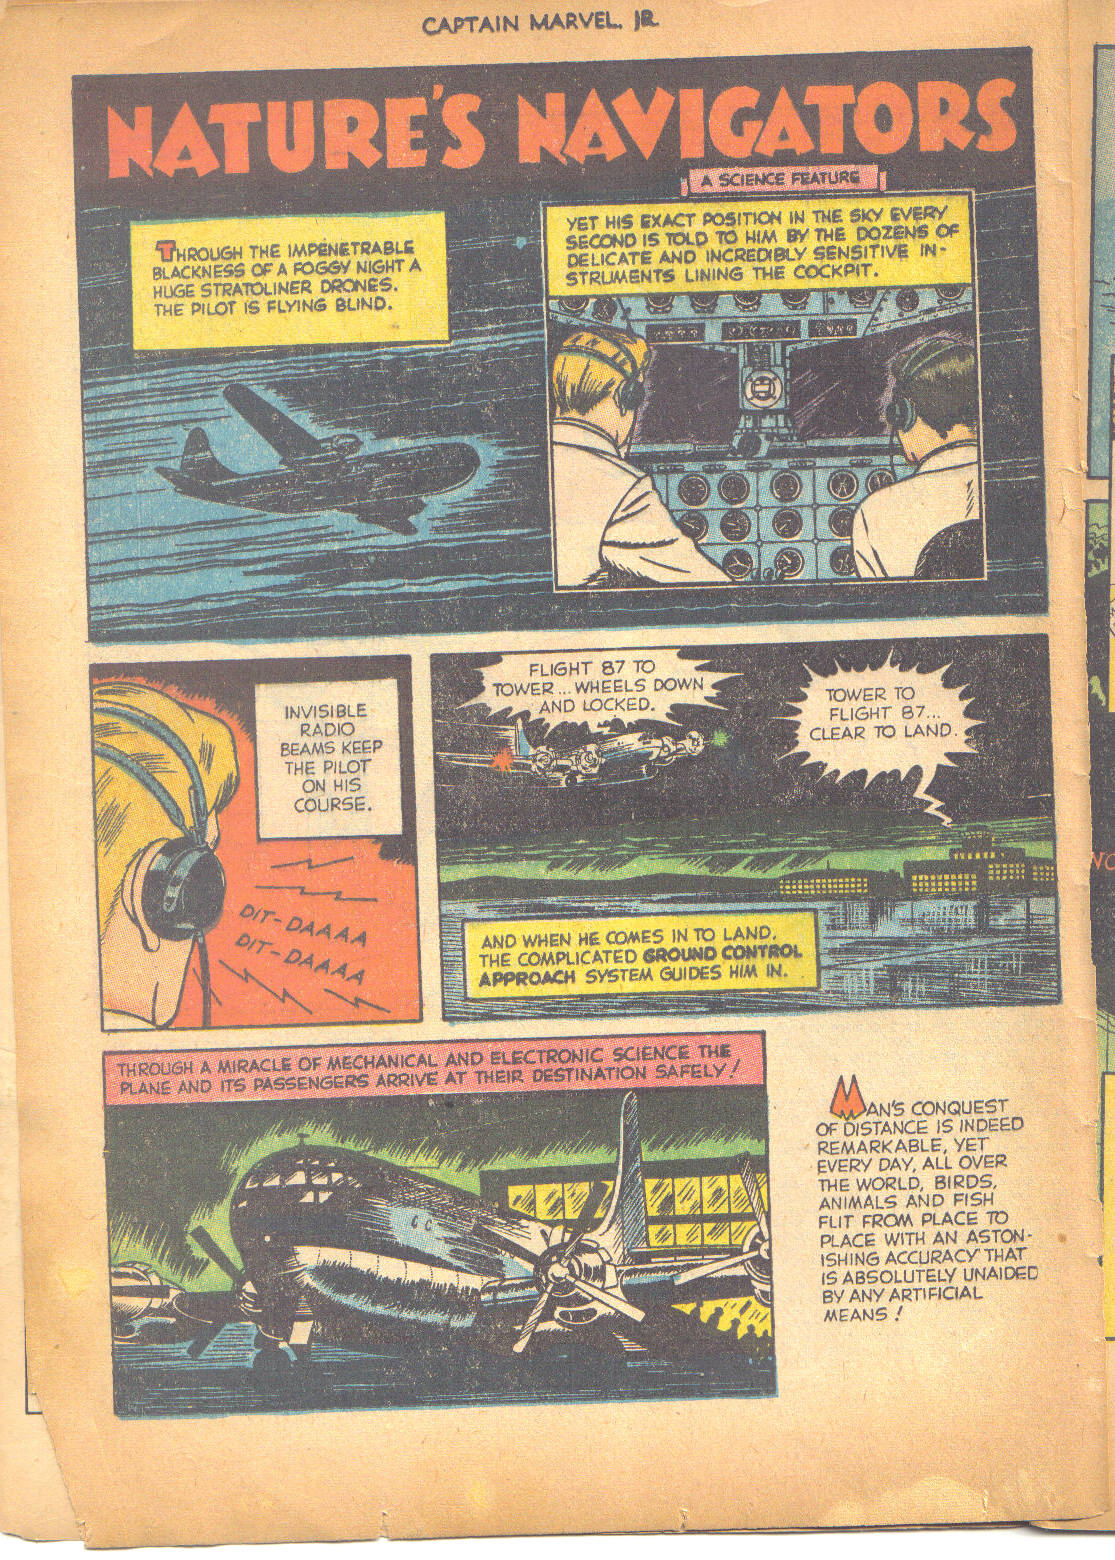 Read online Captain Marvel, Jr. comic -  Issue #117 - 12